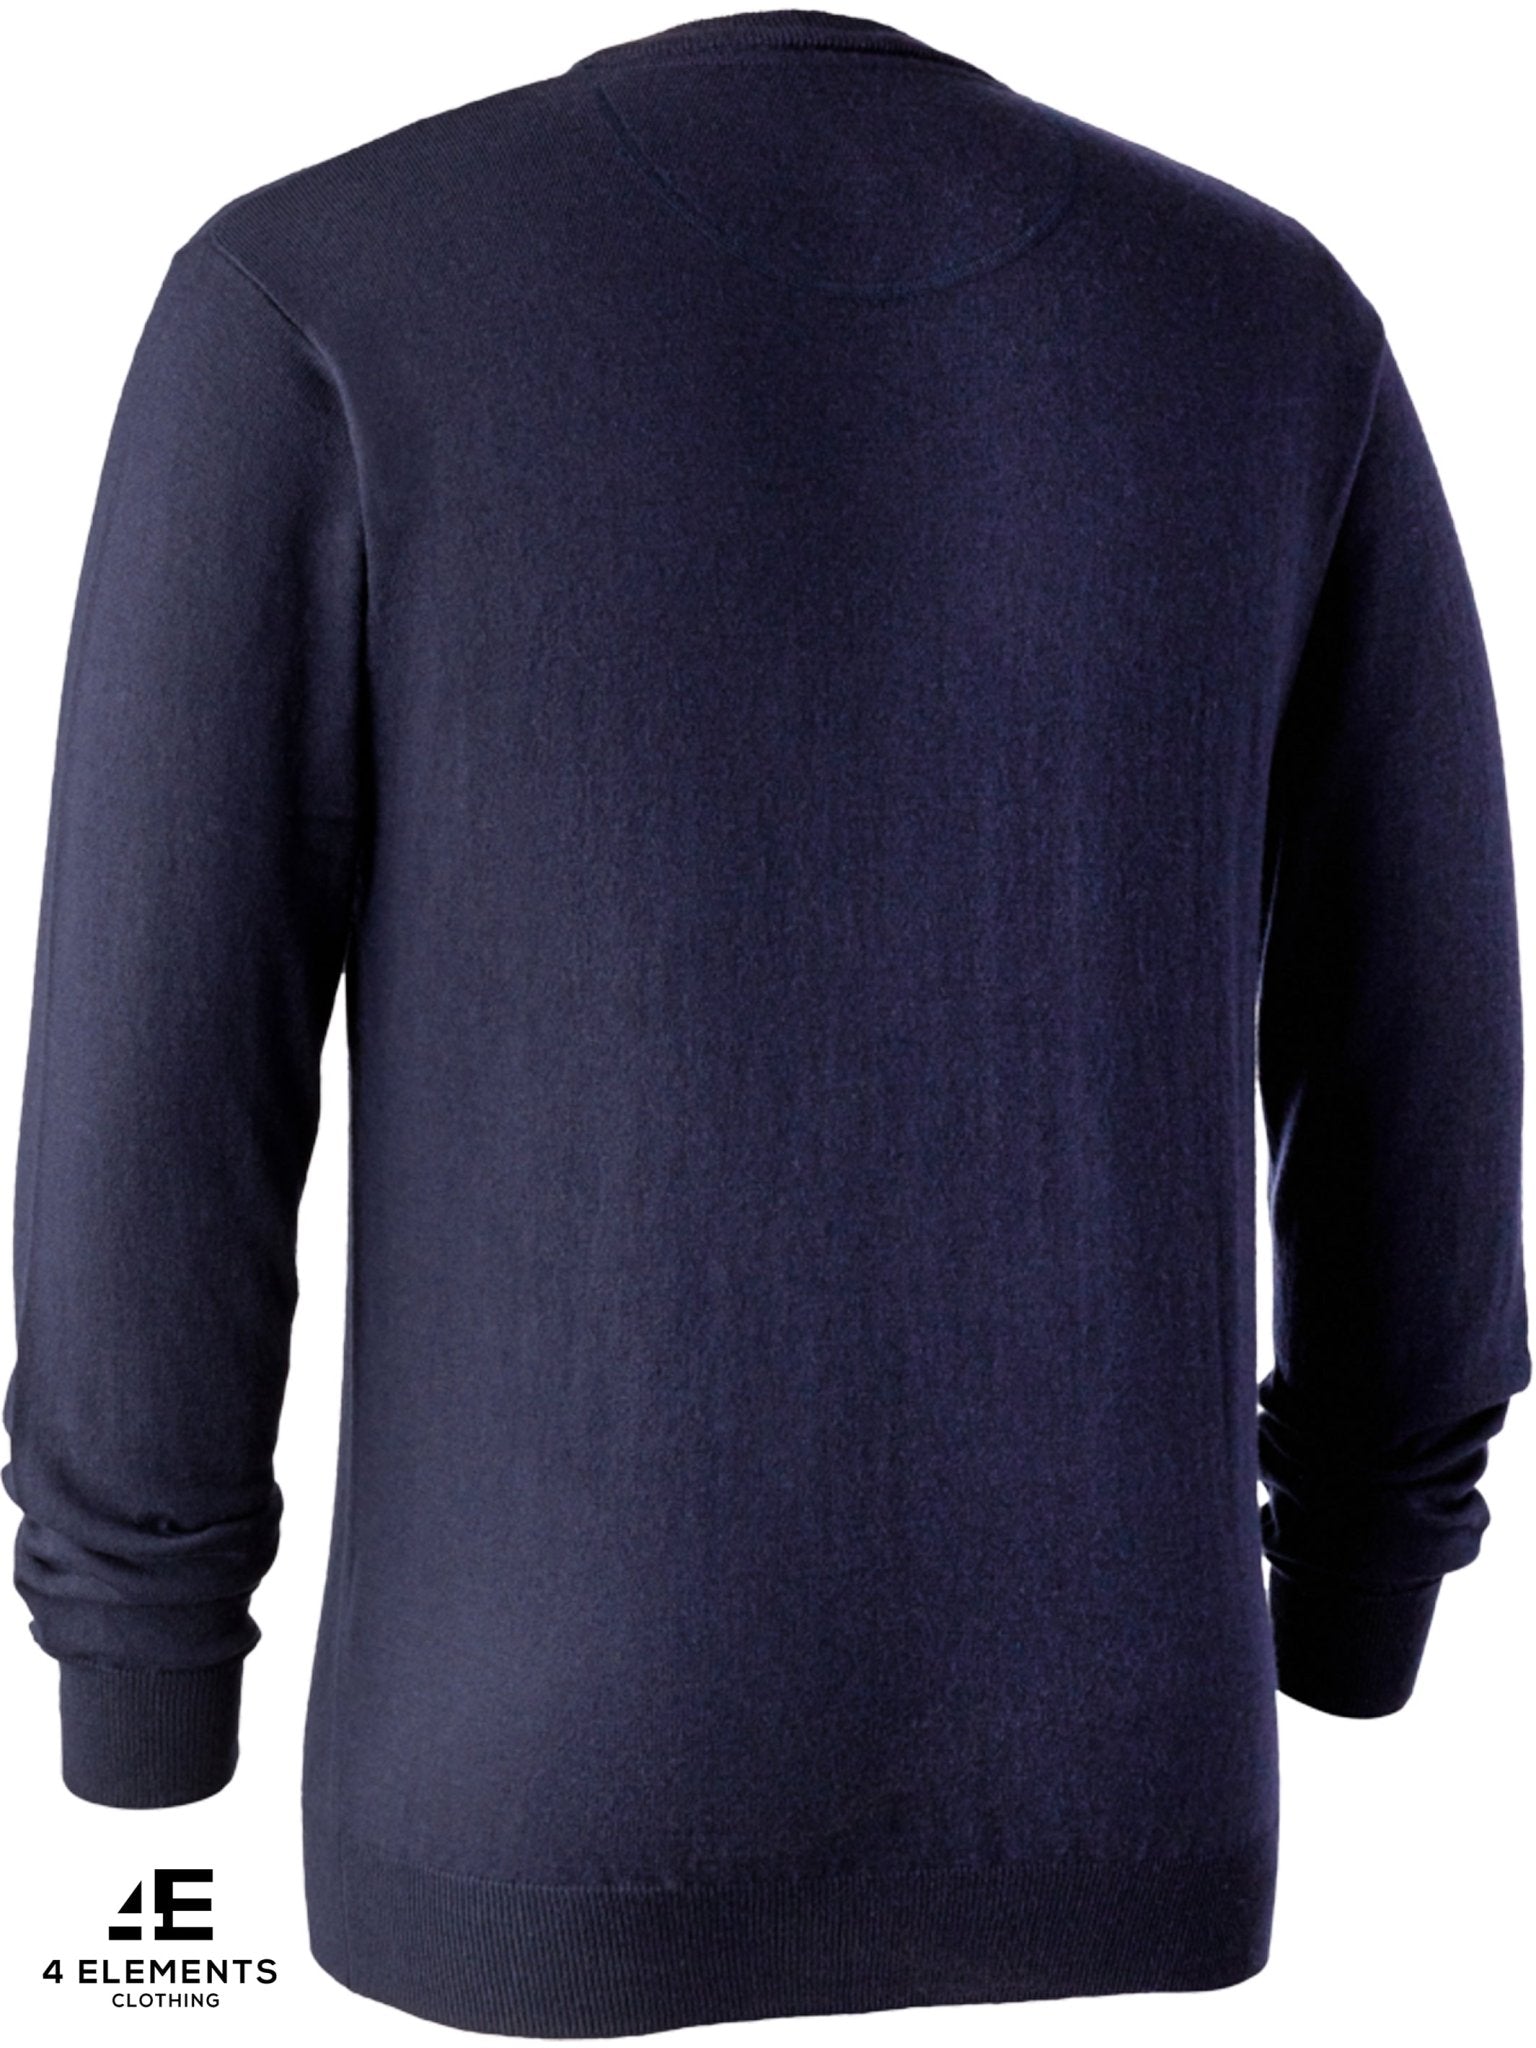 4elementsclothingDeerhunterDeerhunter - Kingston knit Pullover / Jumper - V NeckKnitwear